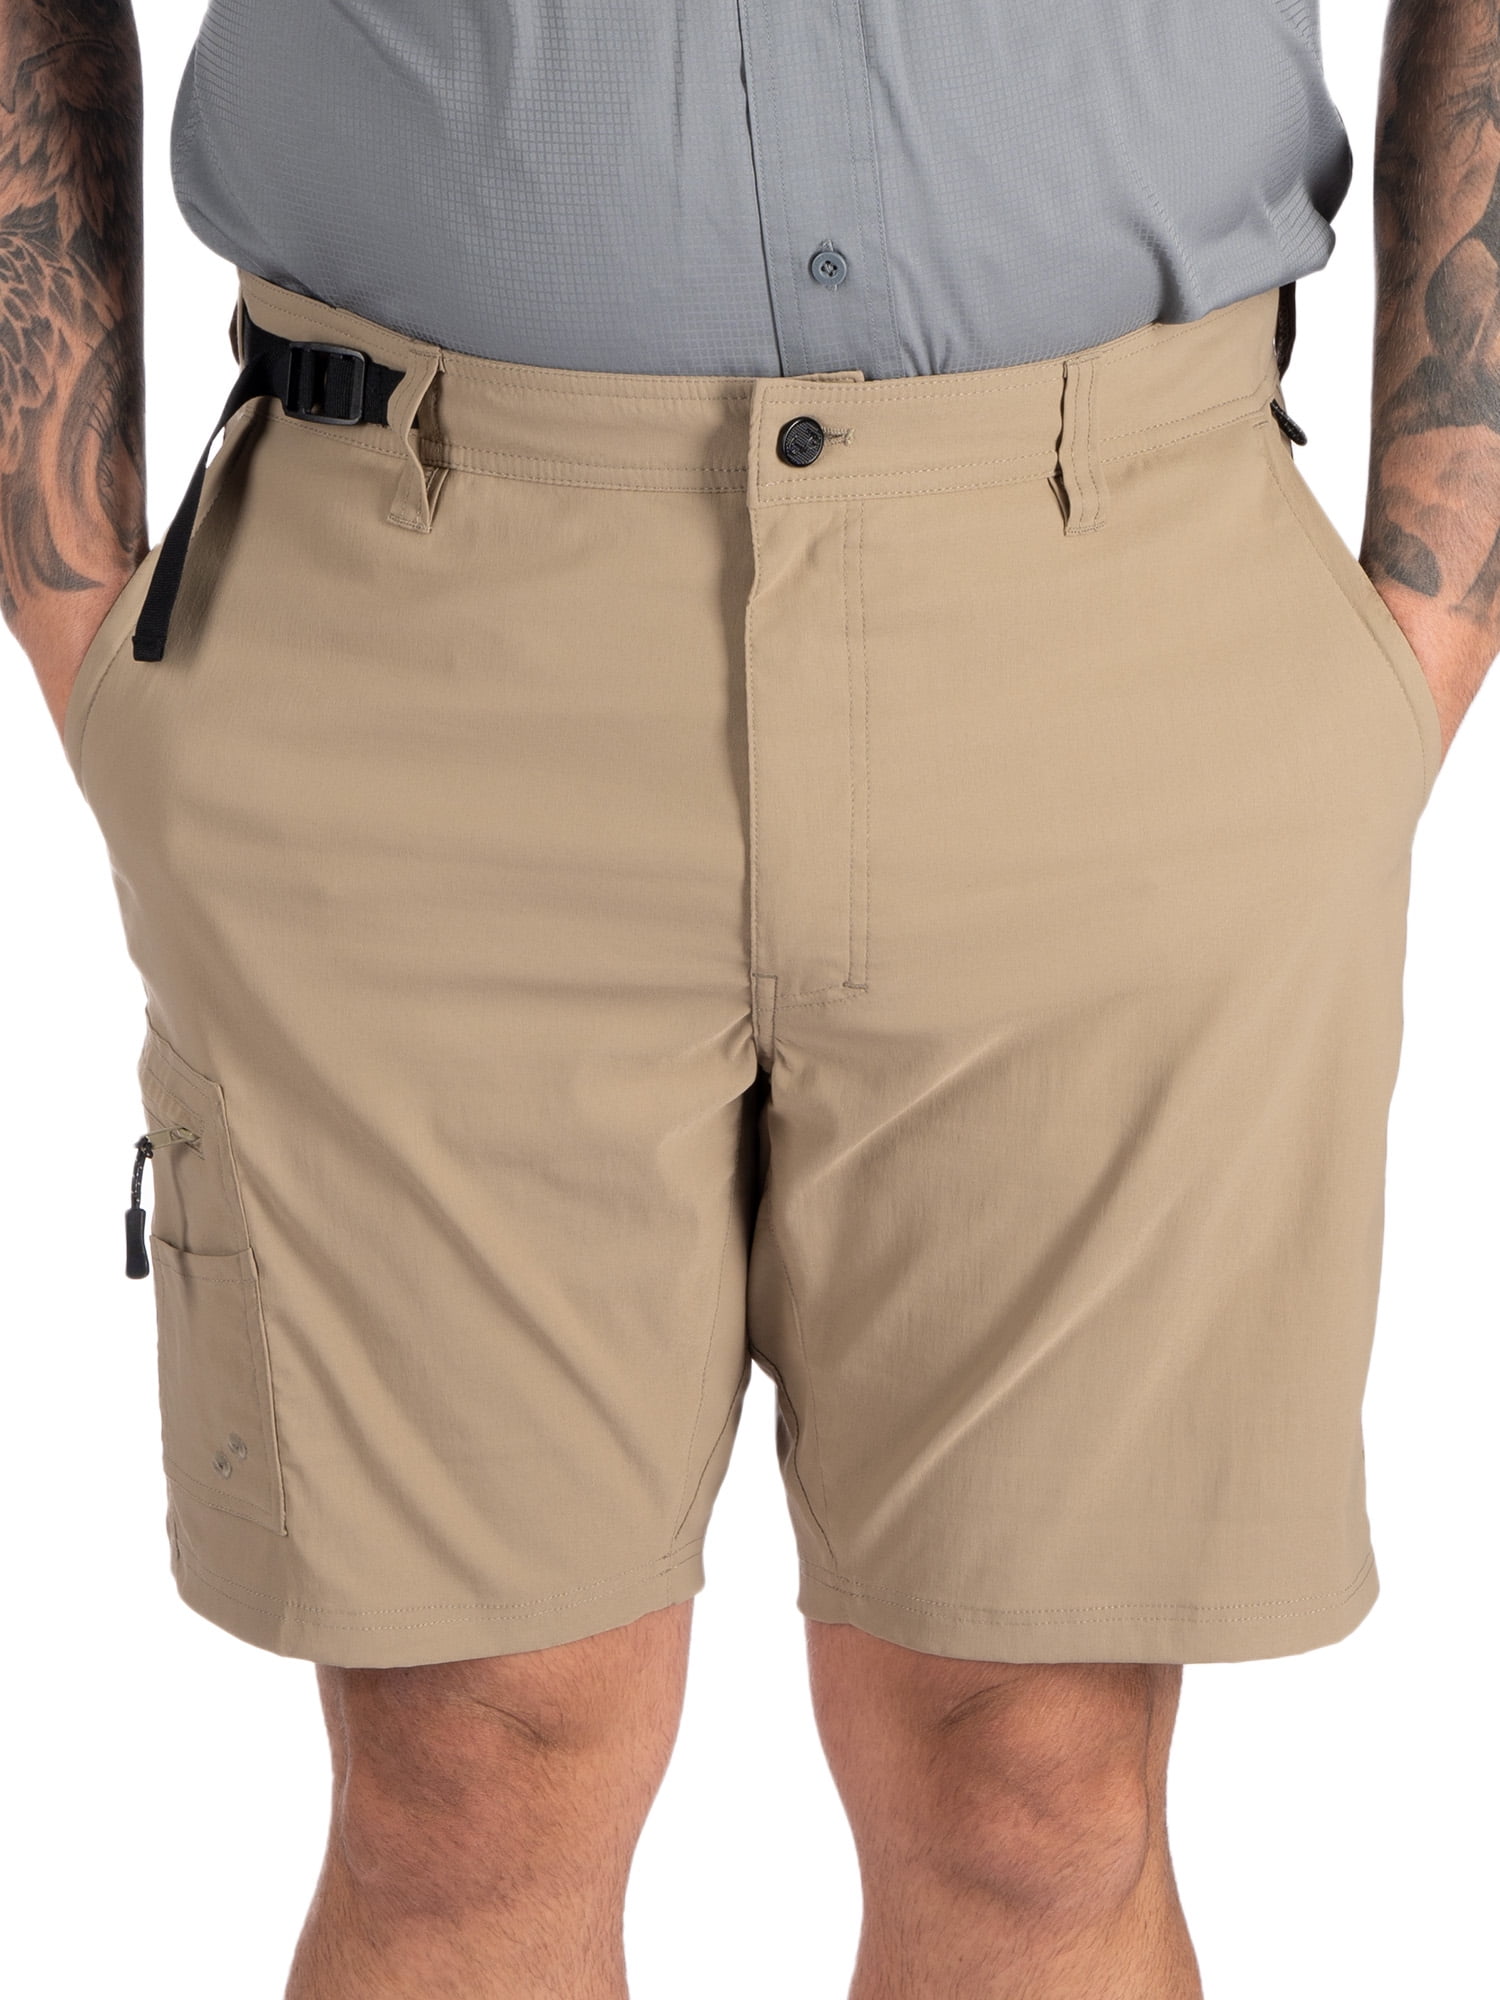 Realtree Men's Hybrid Fishing Shorts, Athletic Performance Short Pants in  Stone Tan, Sizes S-3XL 